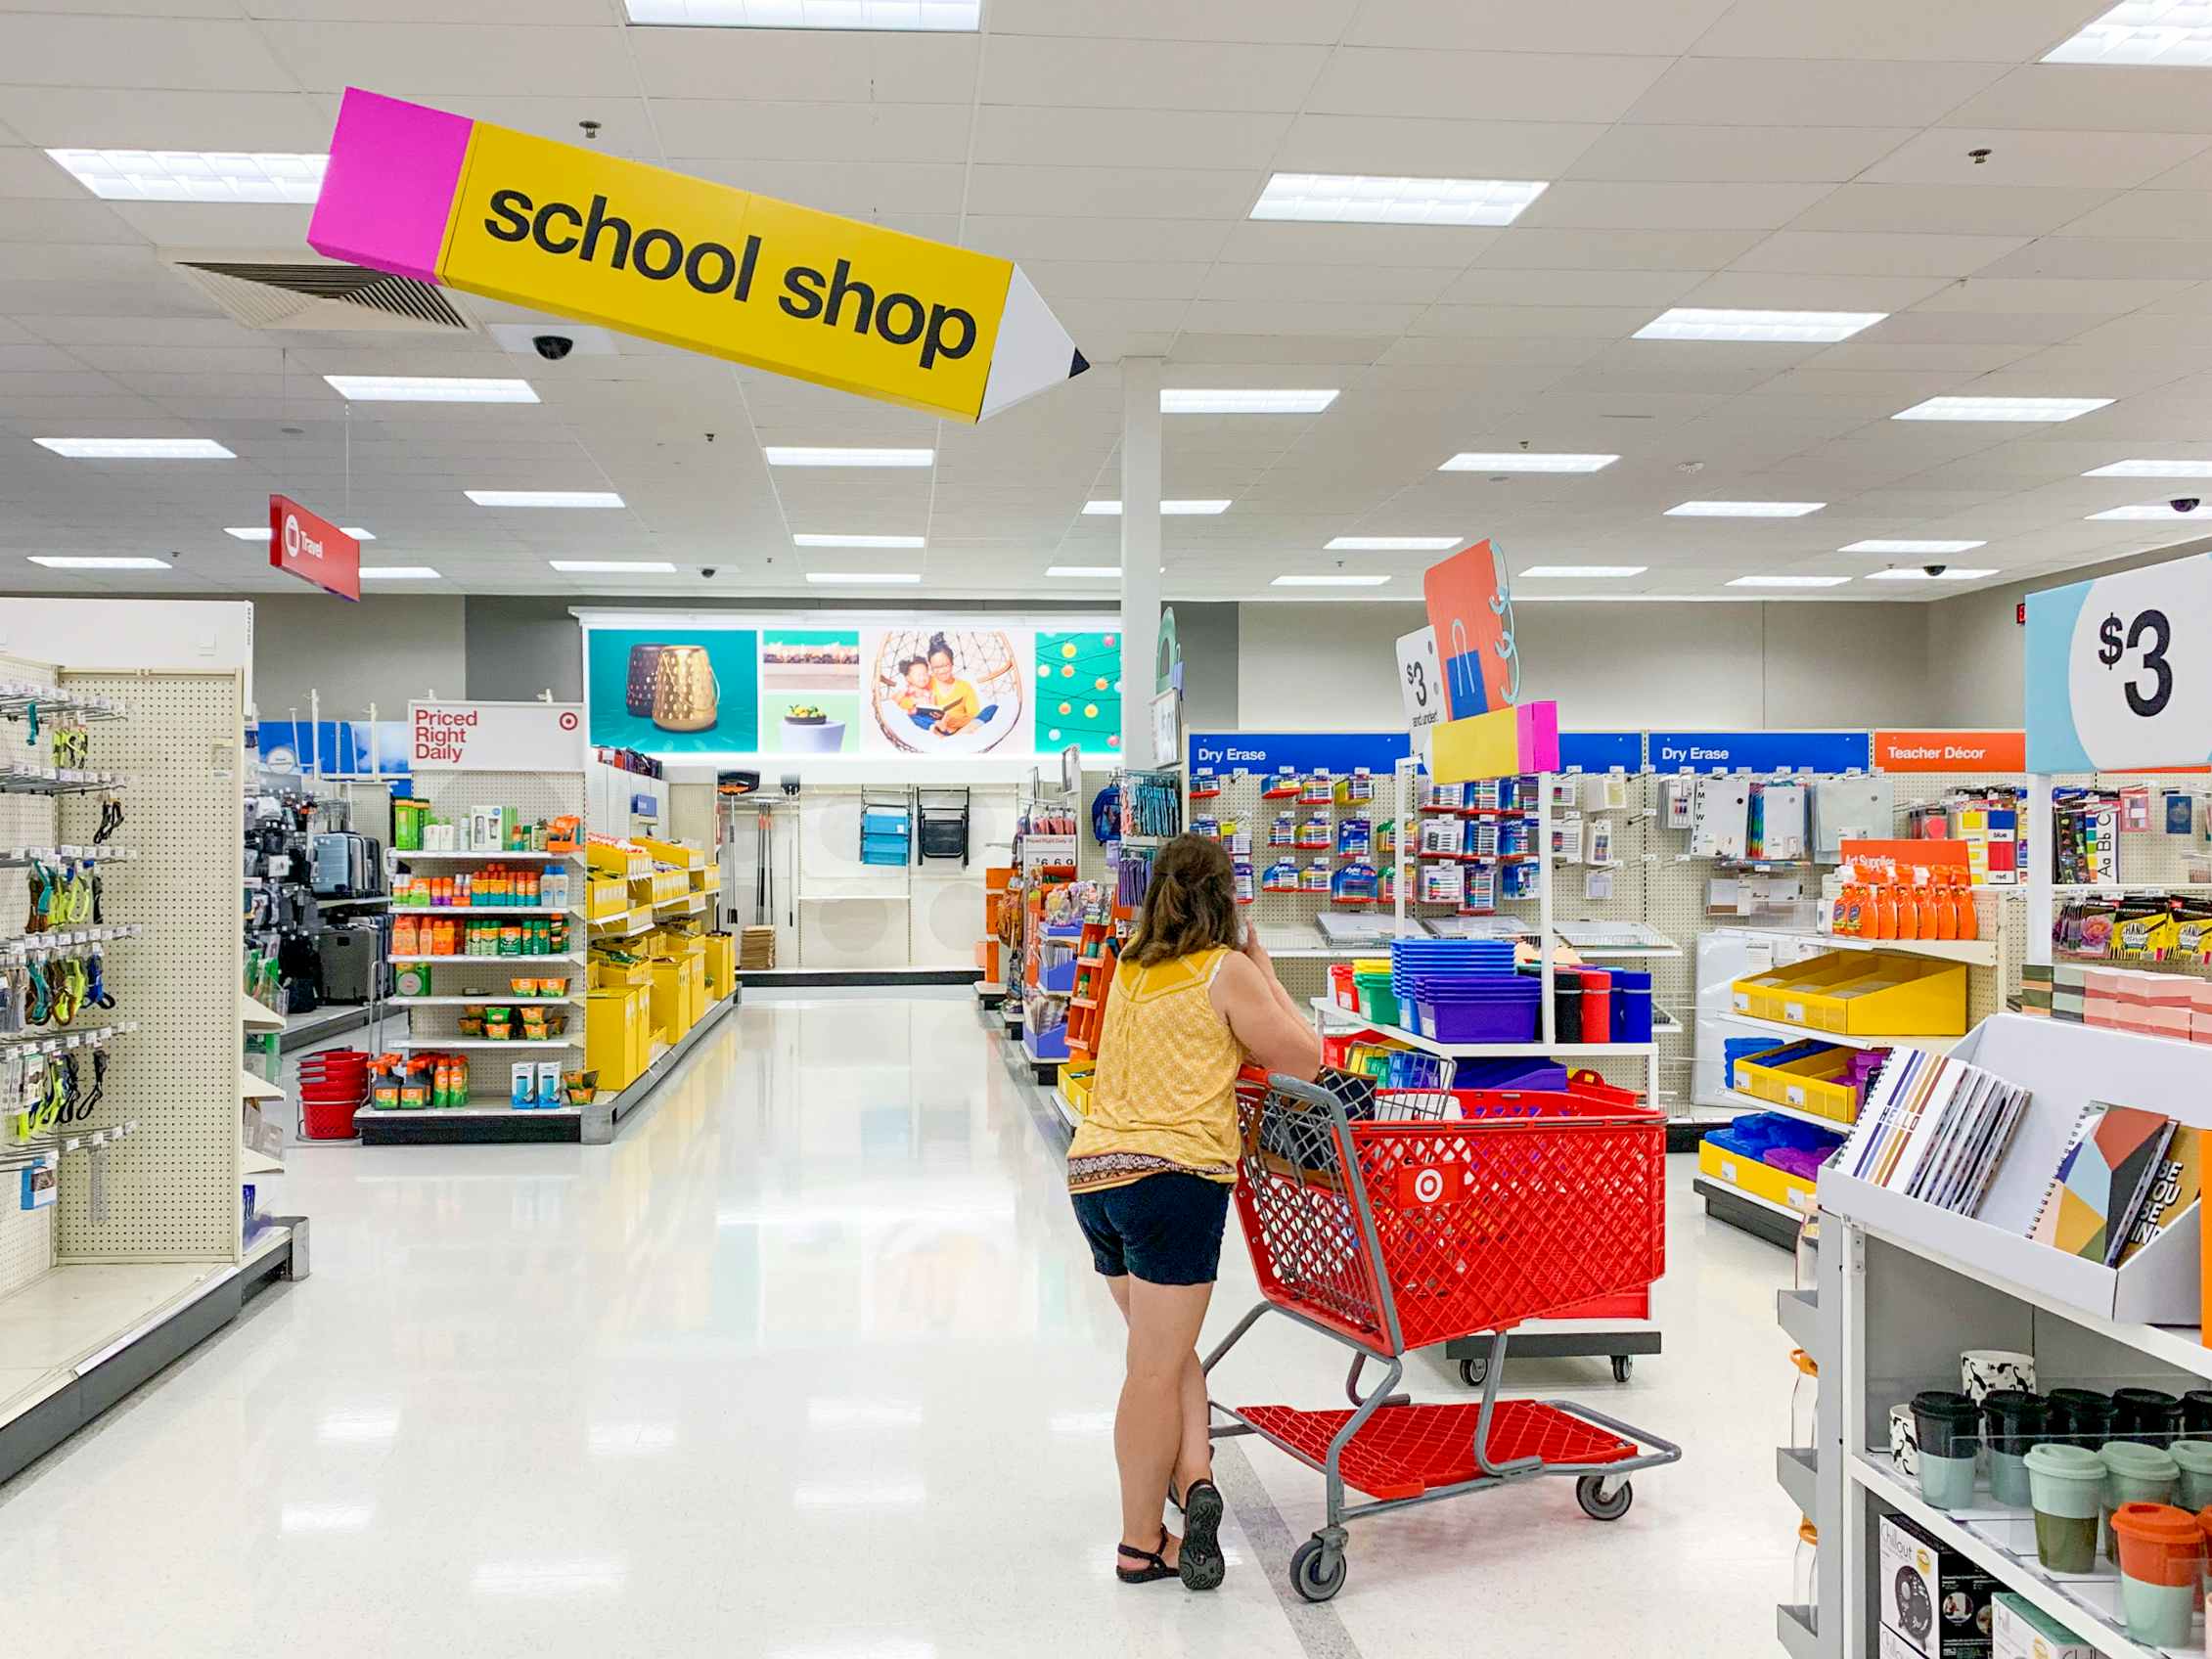 School Supplies & Discount Teacher Supply Store